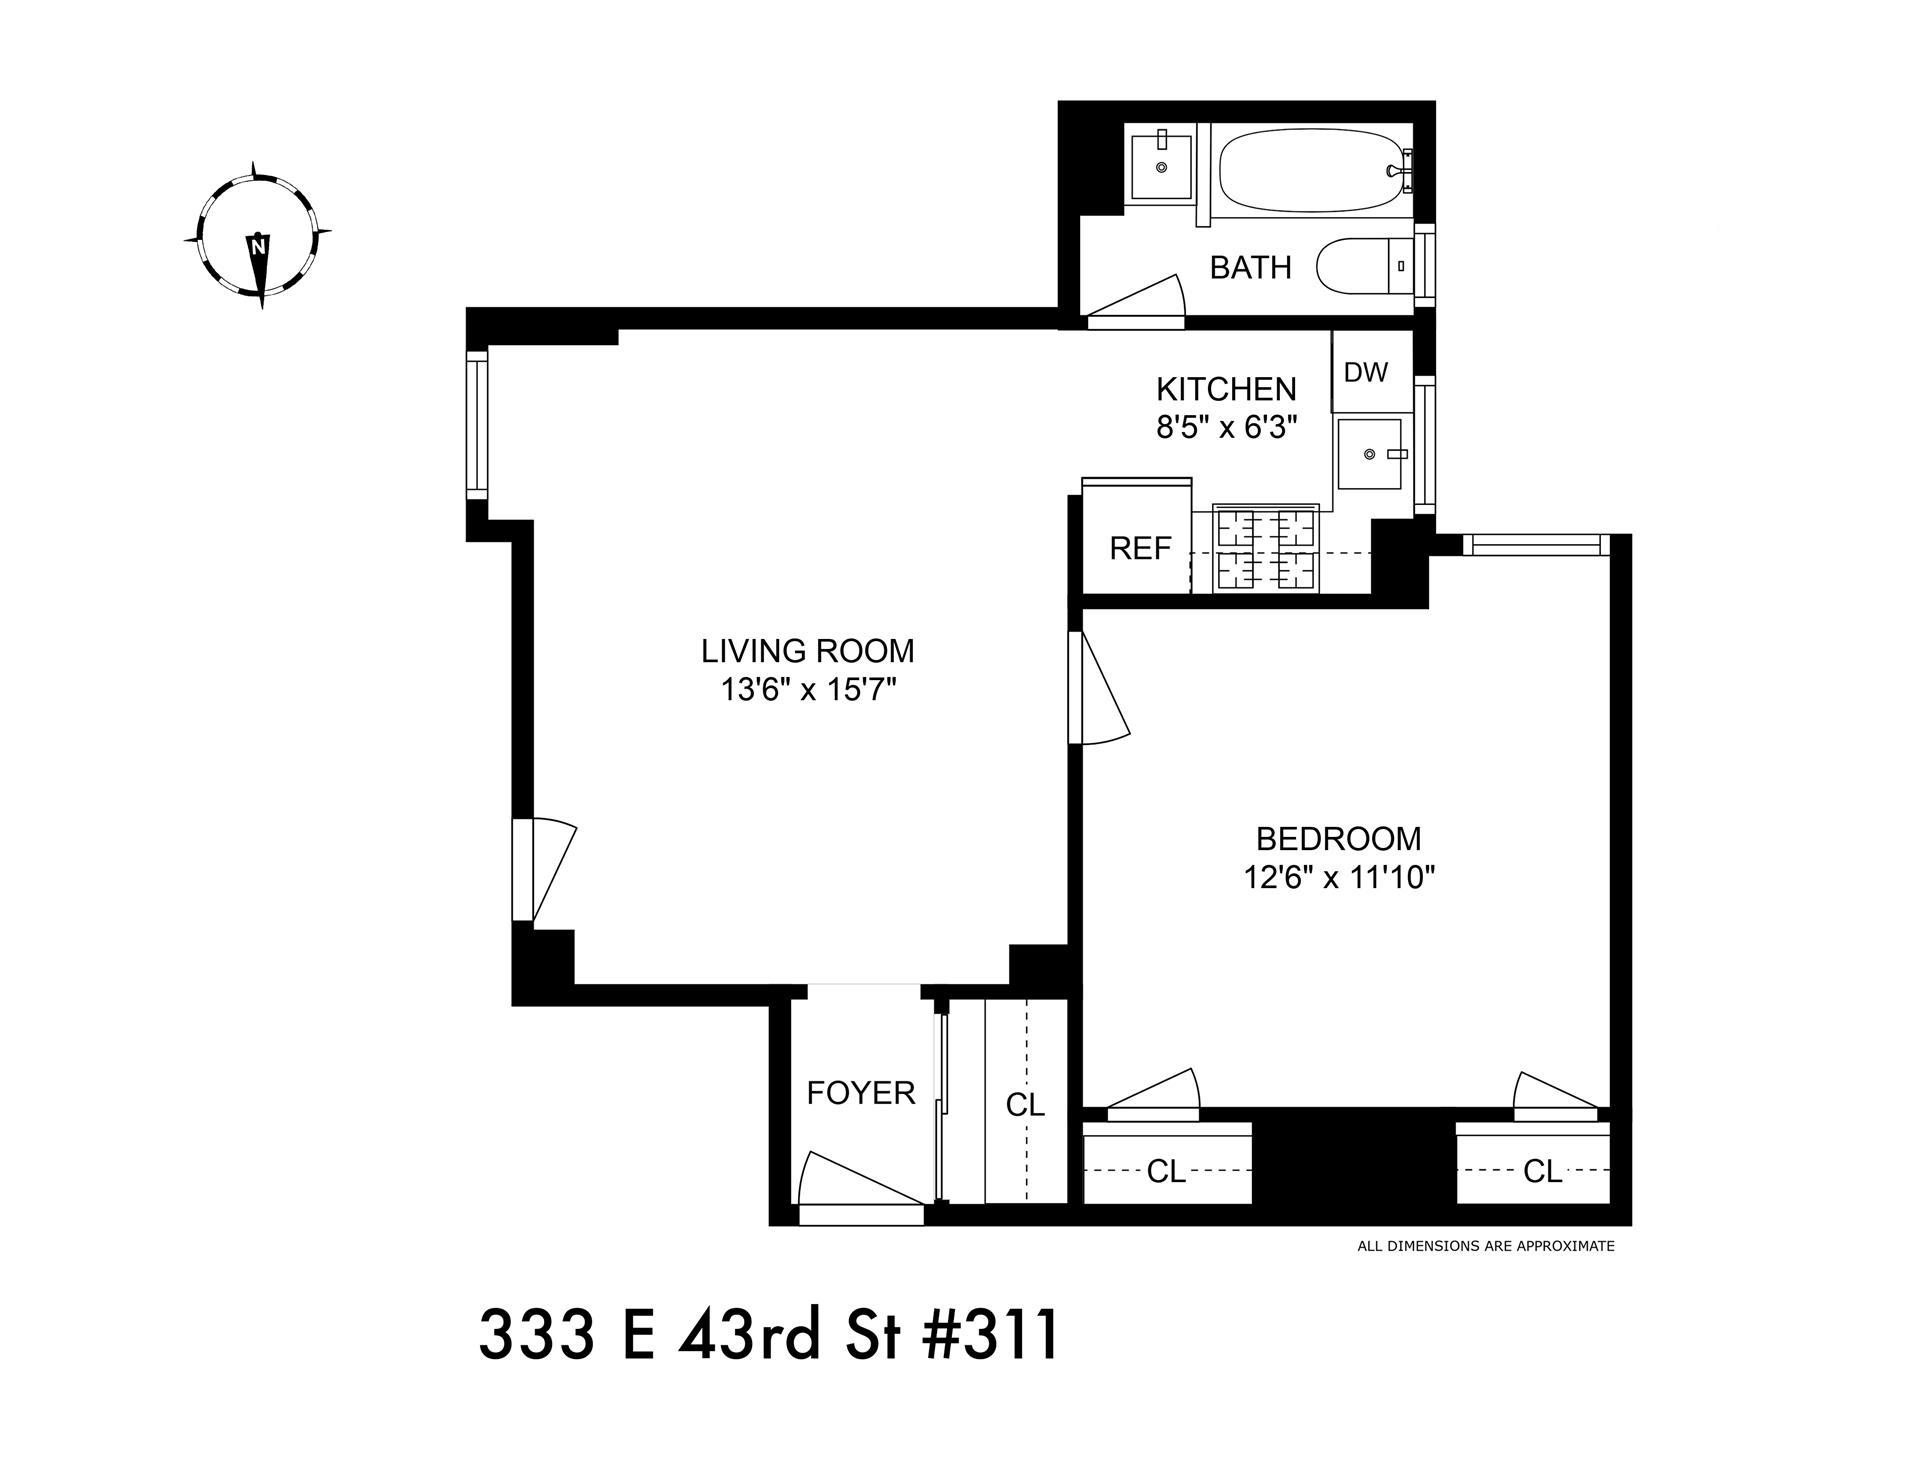 Floorplan for 333 East 43rd Street, 311